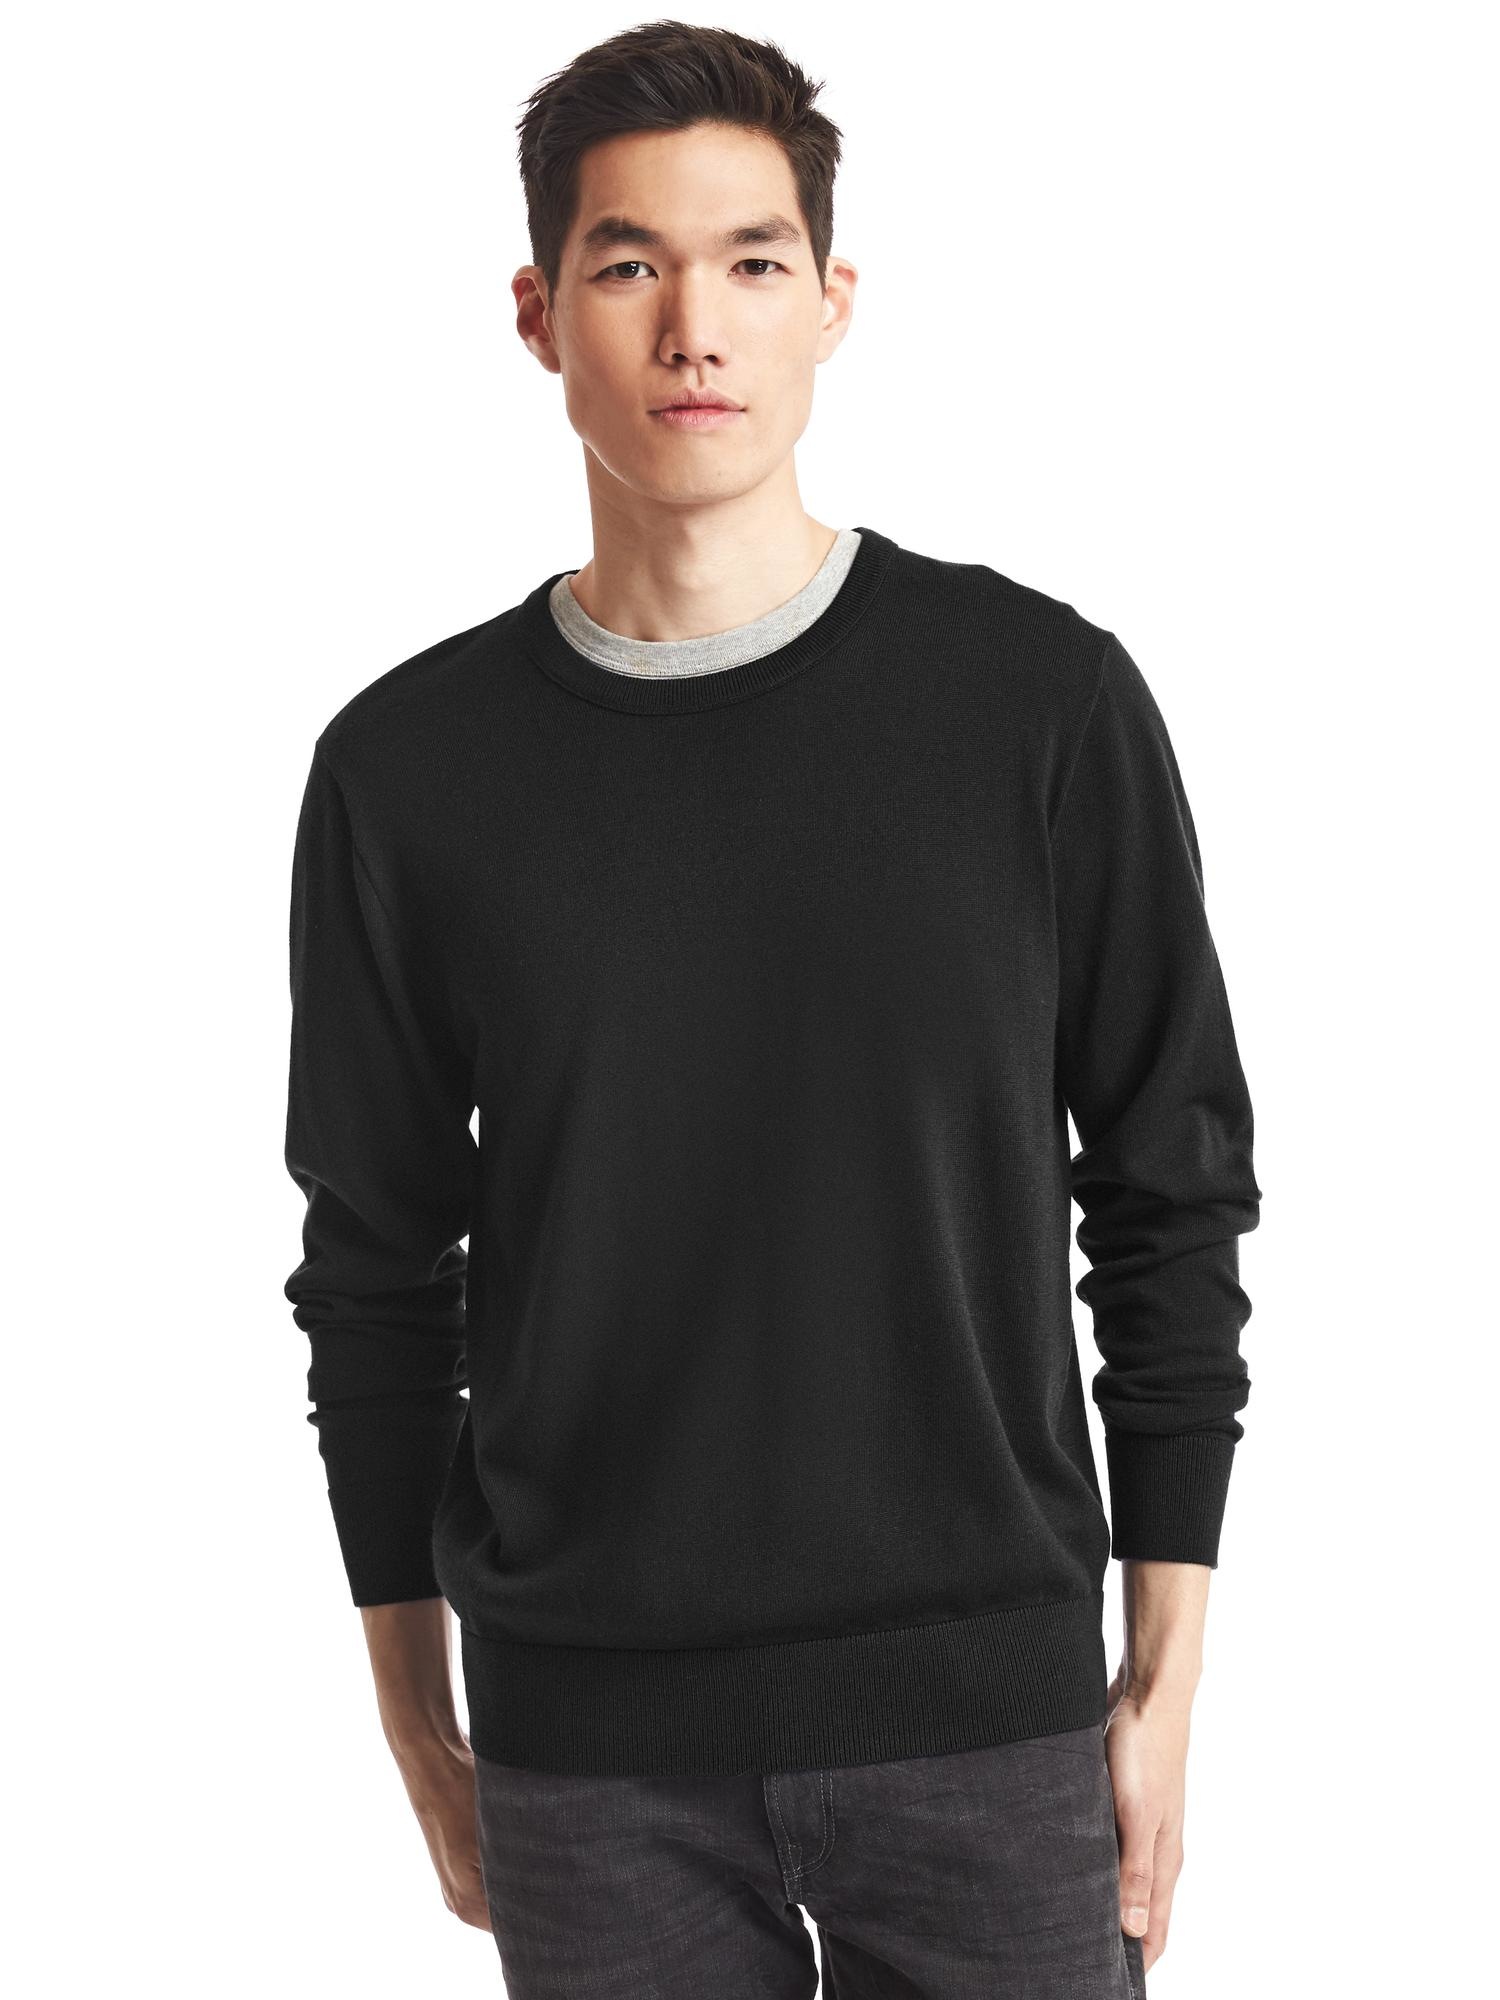 Aliexpress.com : Buy Men's Autumn New Arrival Sweaters